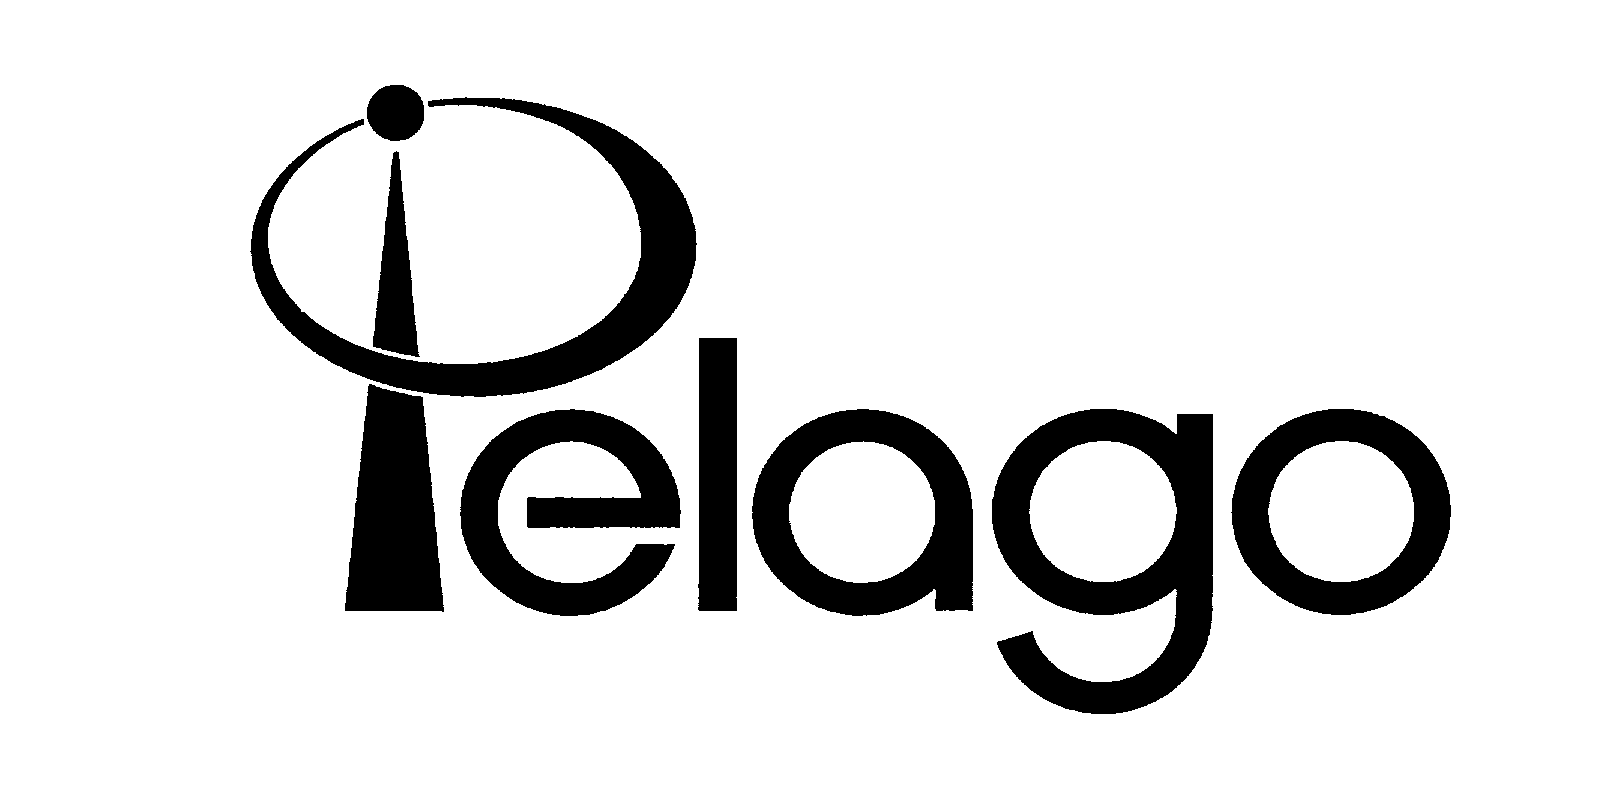 Trademark Logo PELAGO